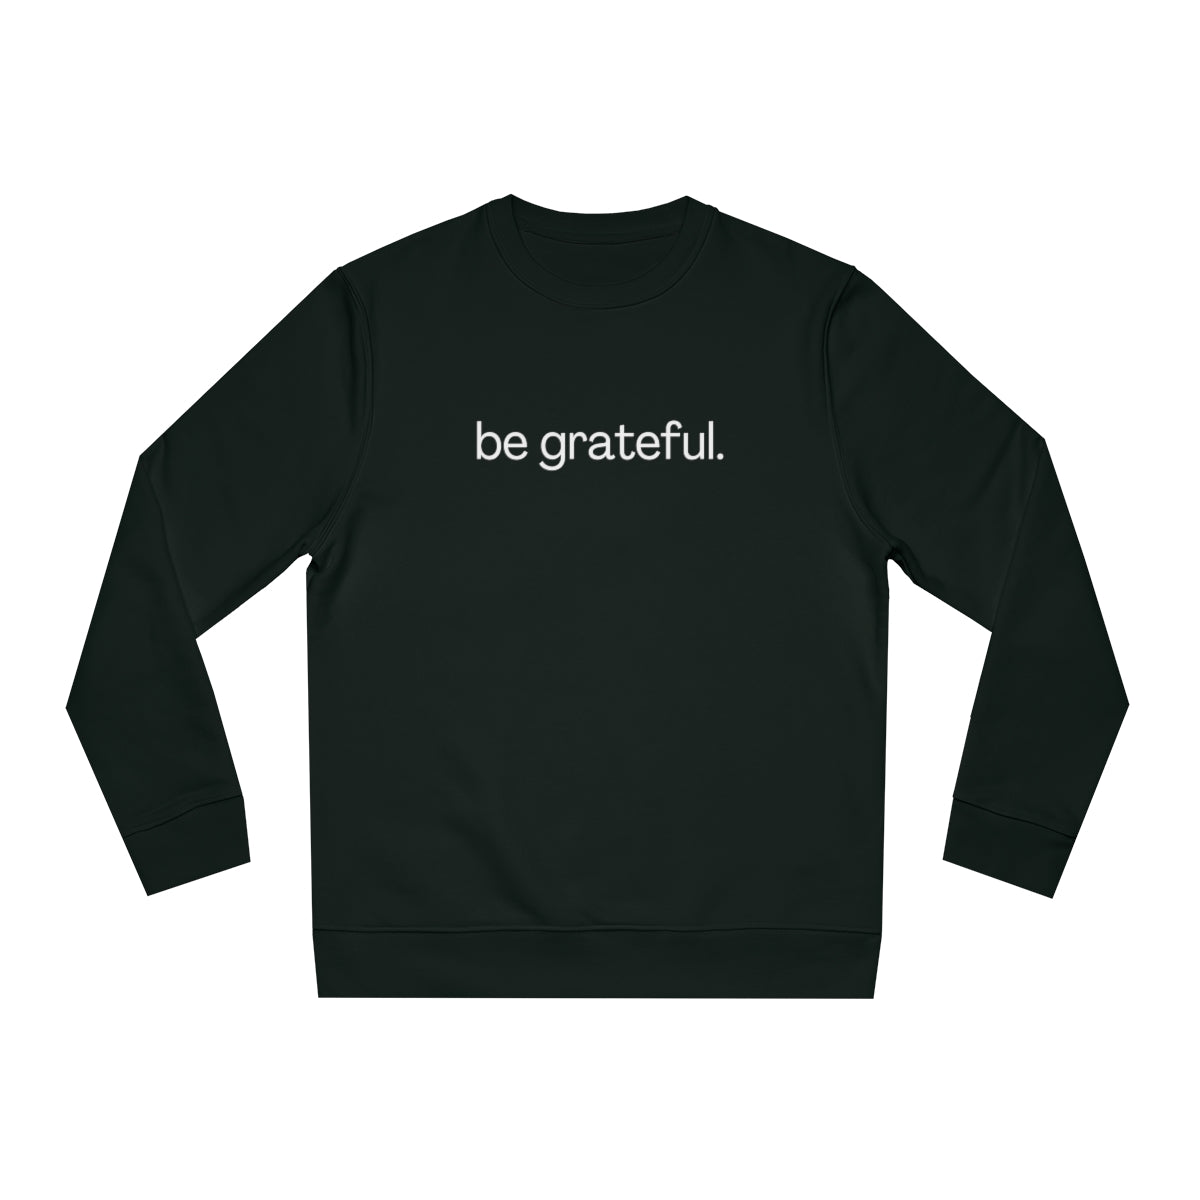 be grateful. - Unisex Crewneck